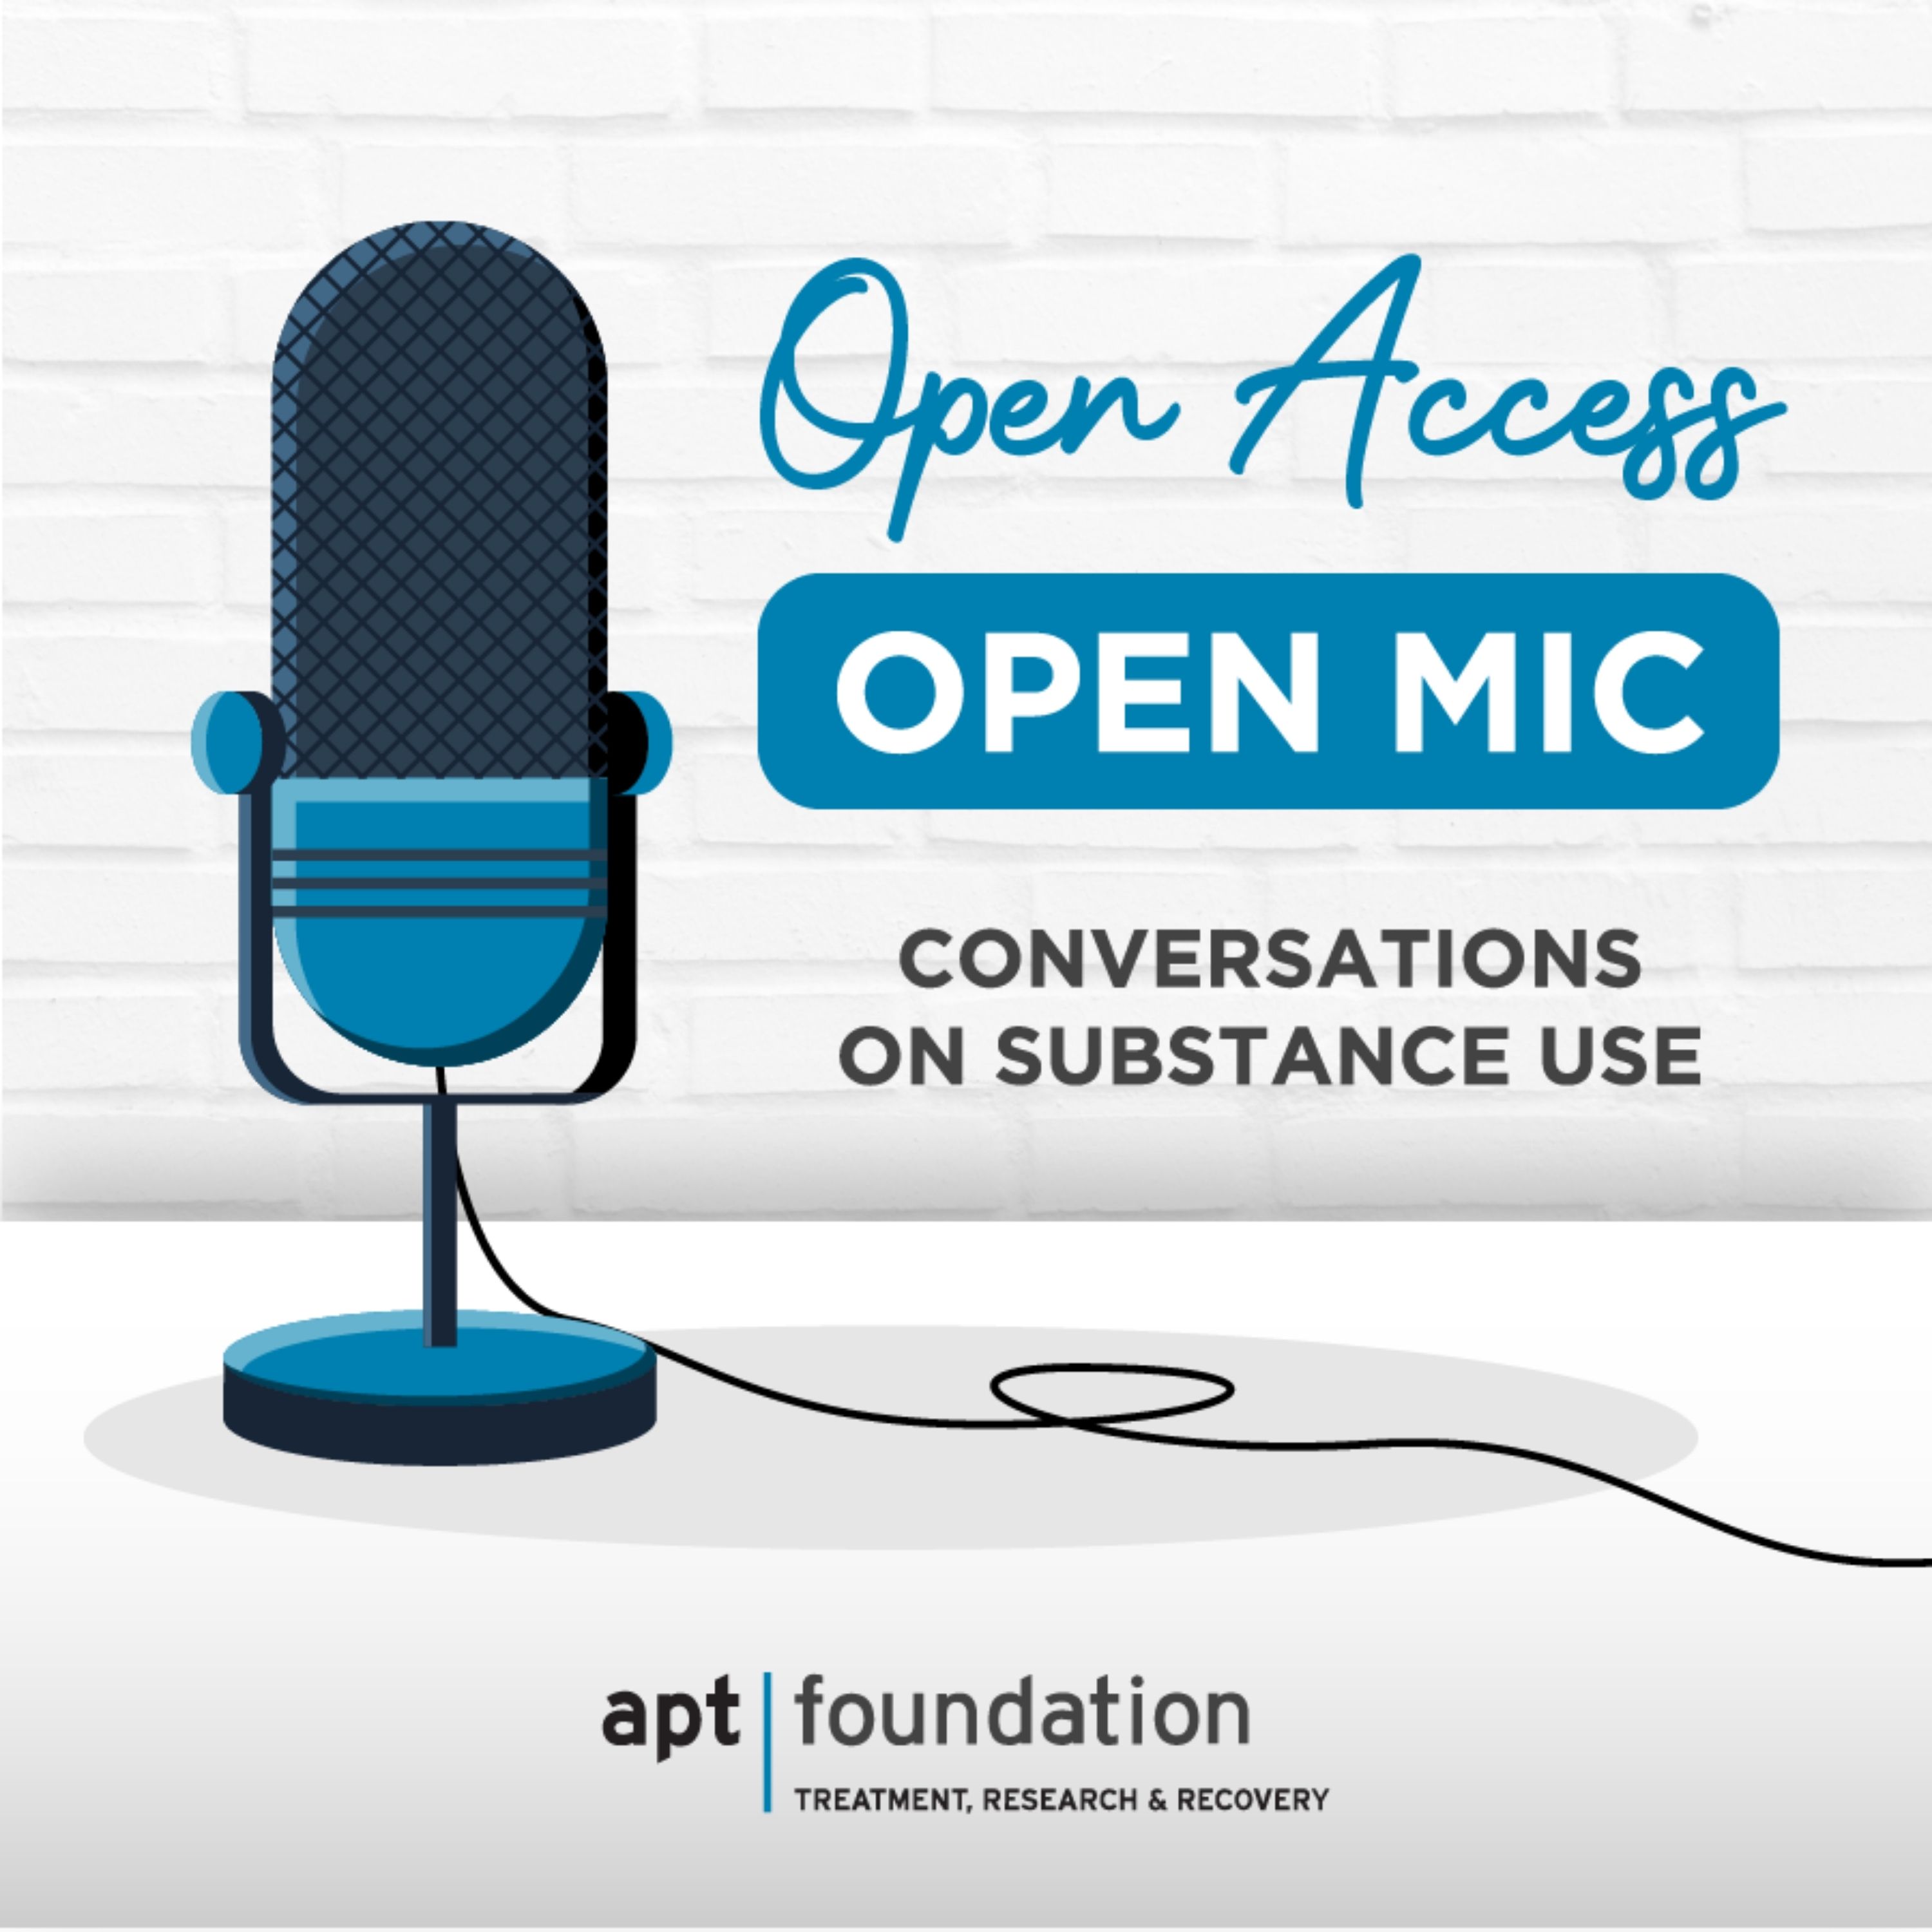 Artwork for Open Access, Open Mic